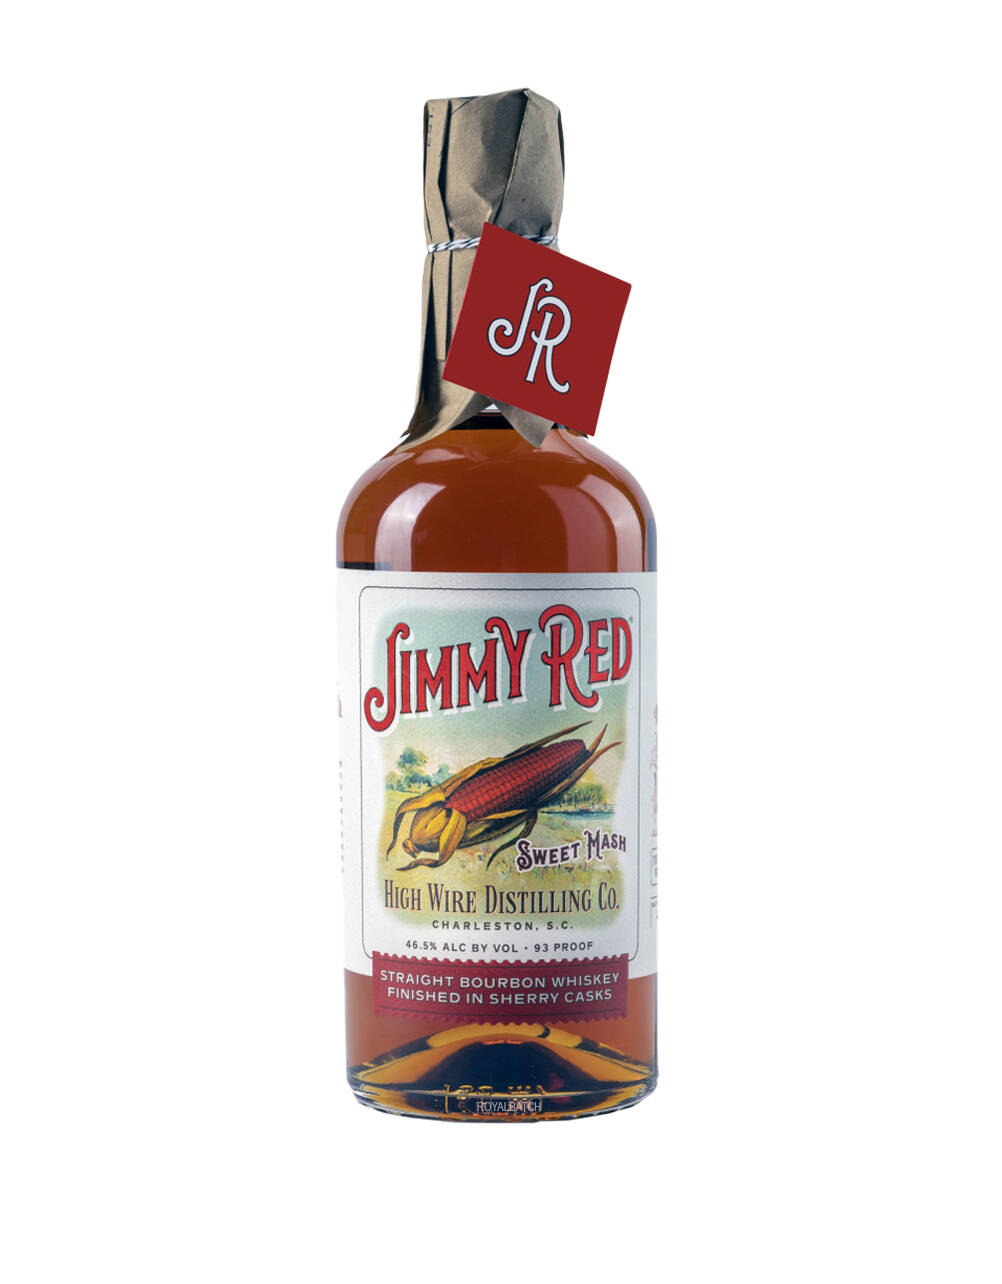 Jimmy Red Sweet Mash Sherry Casks Straight Bourbon Whiskey